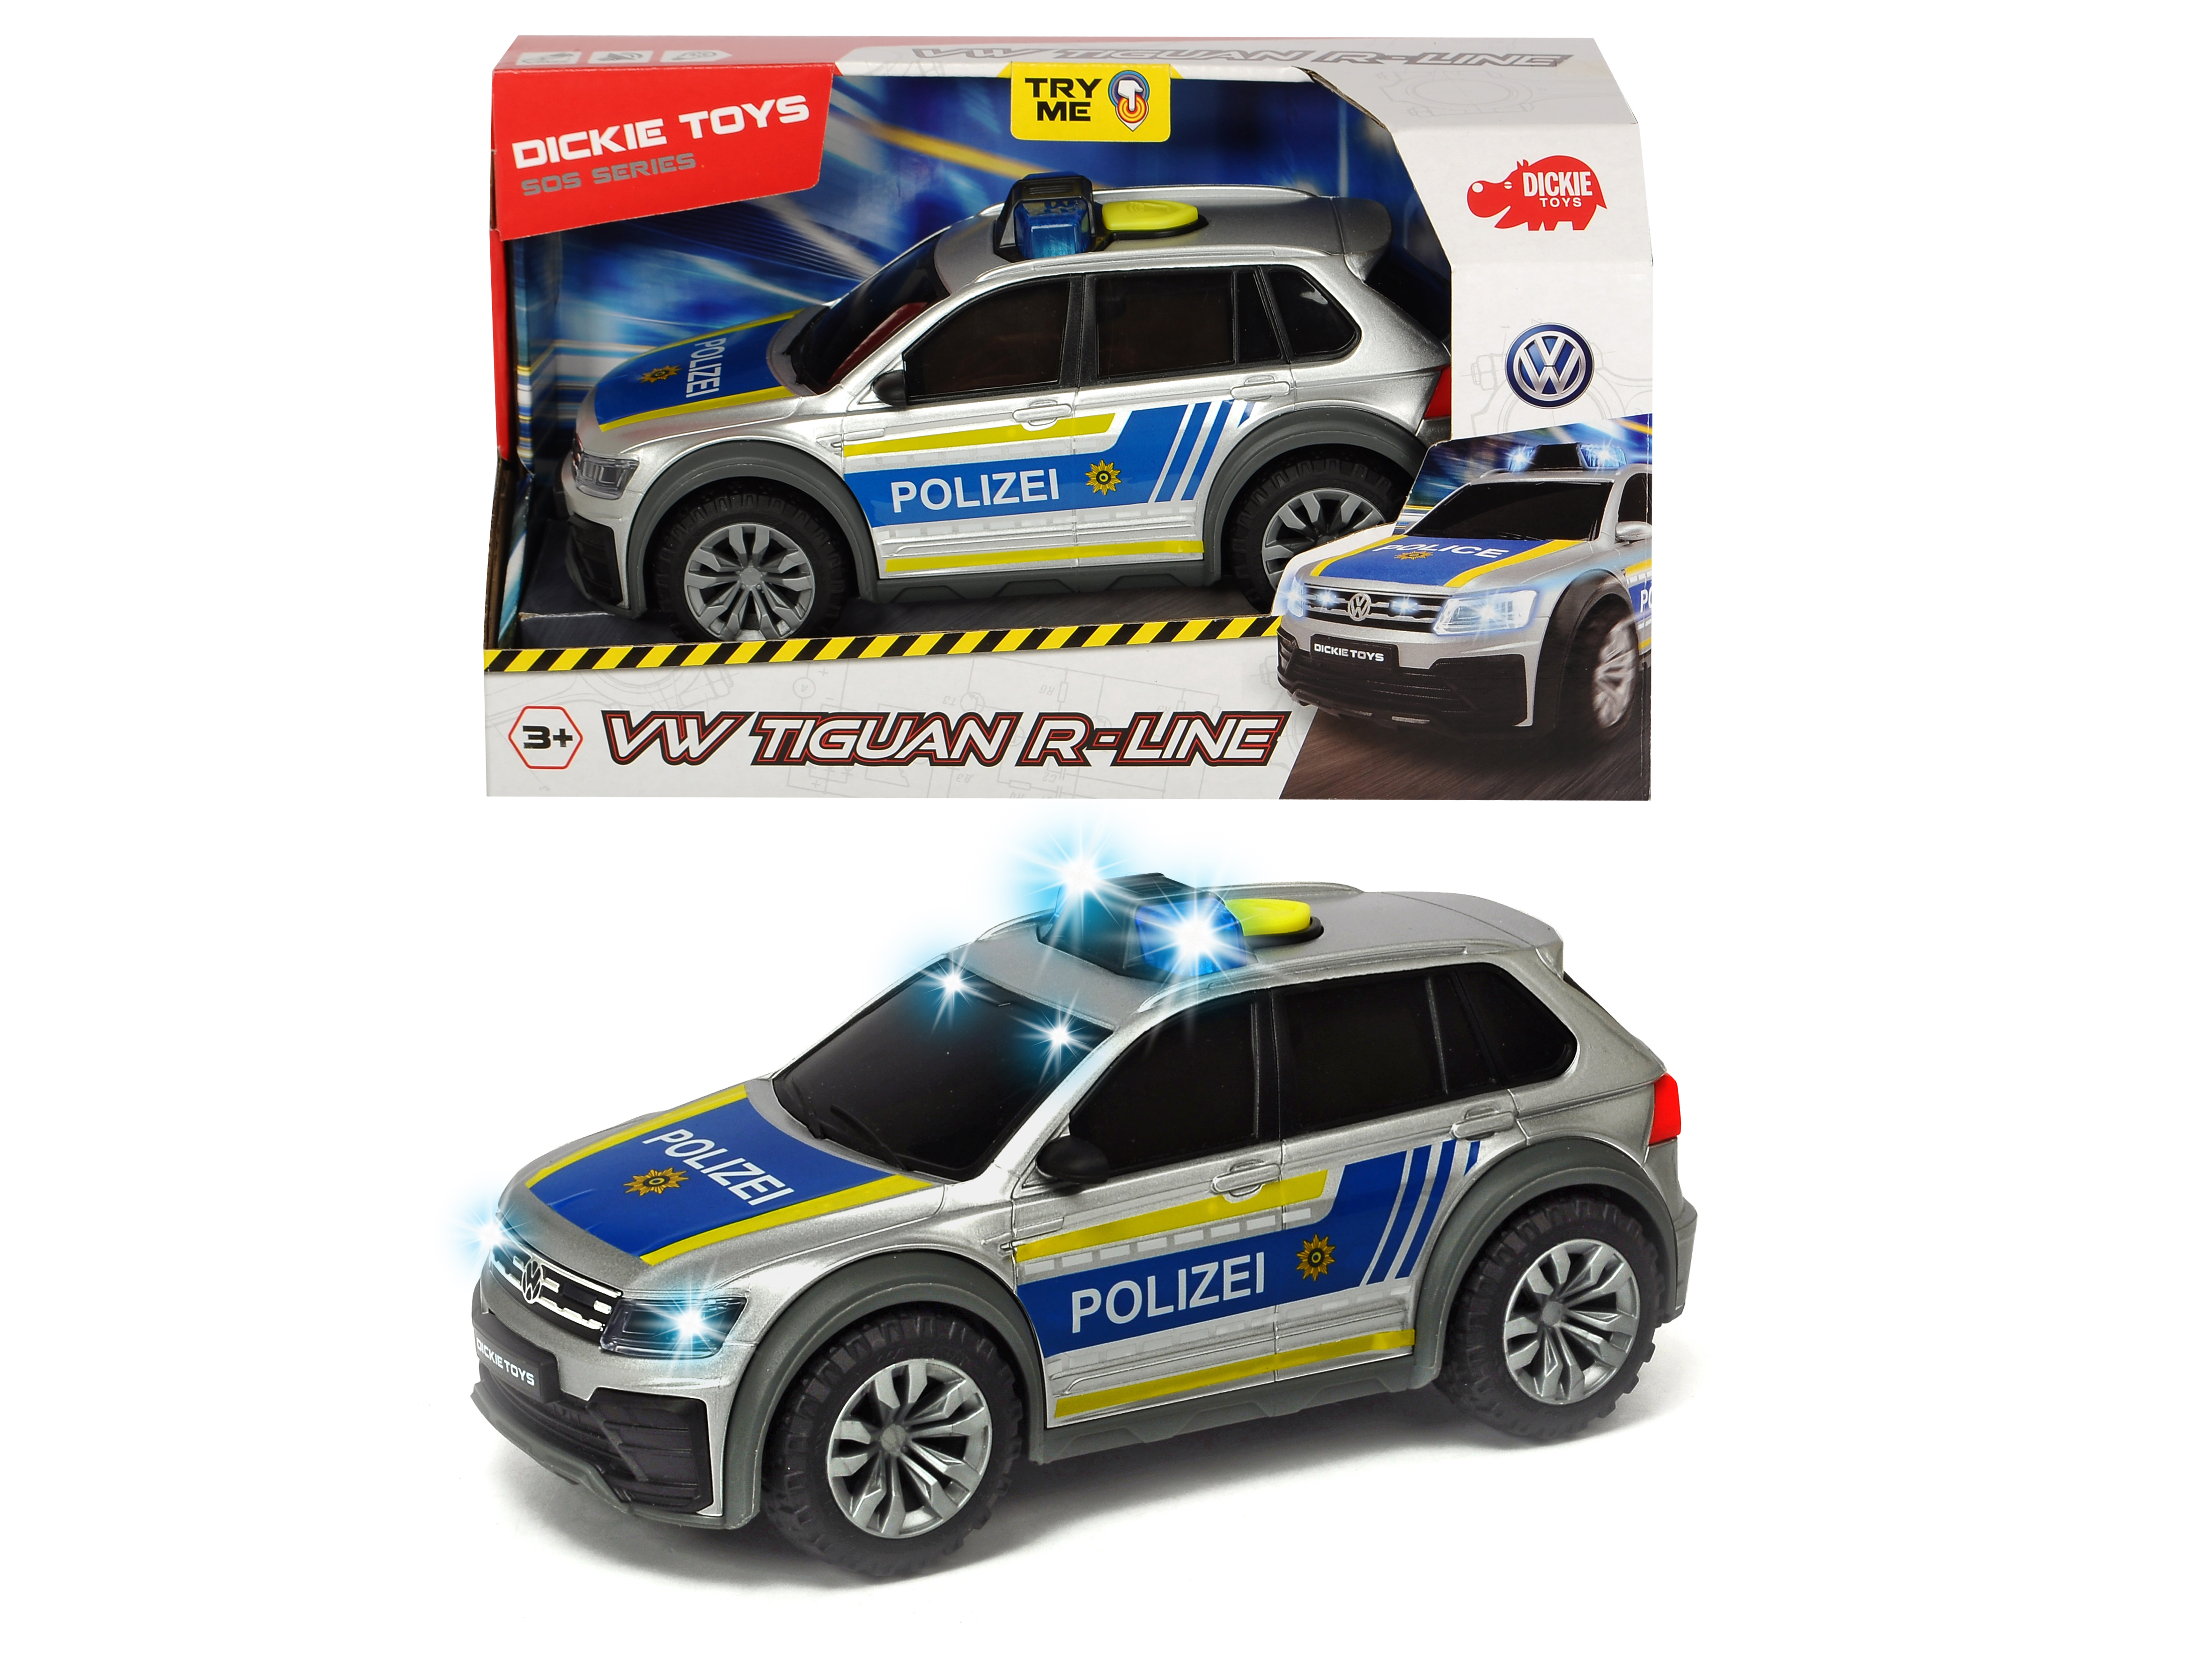 DICKIE-TOYS VW Polizei Spielzeugauto Silber R-Line Tiguan